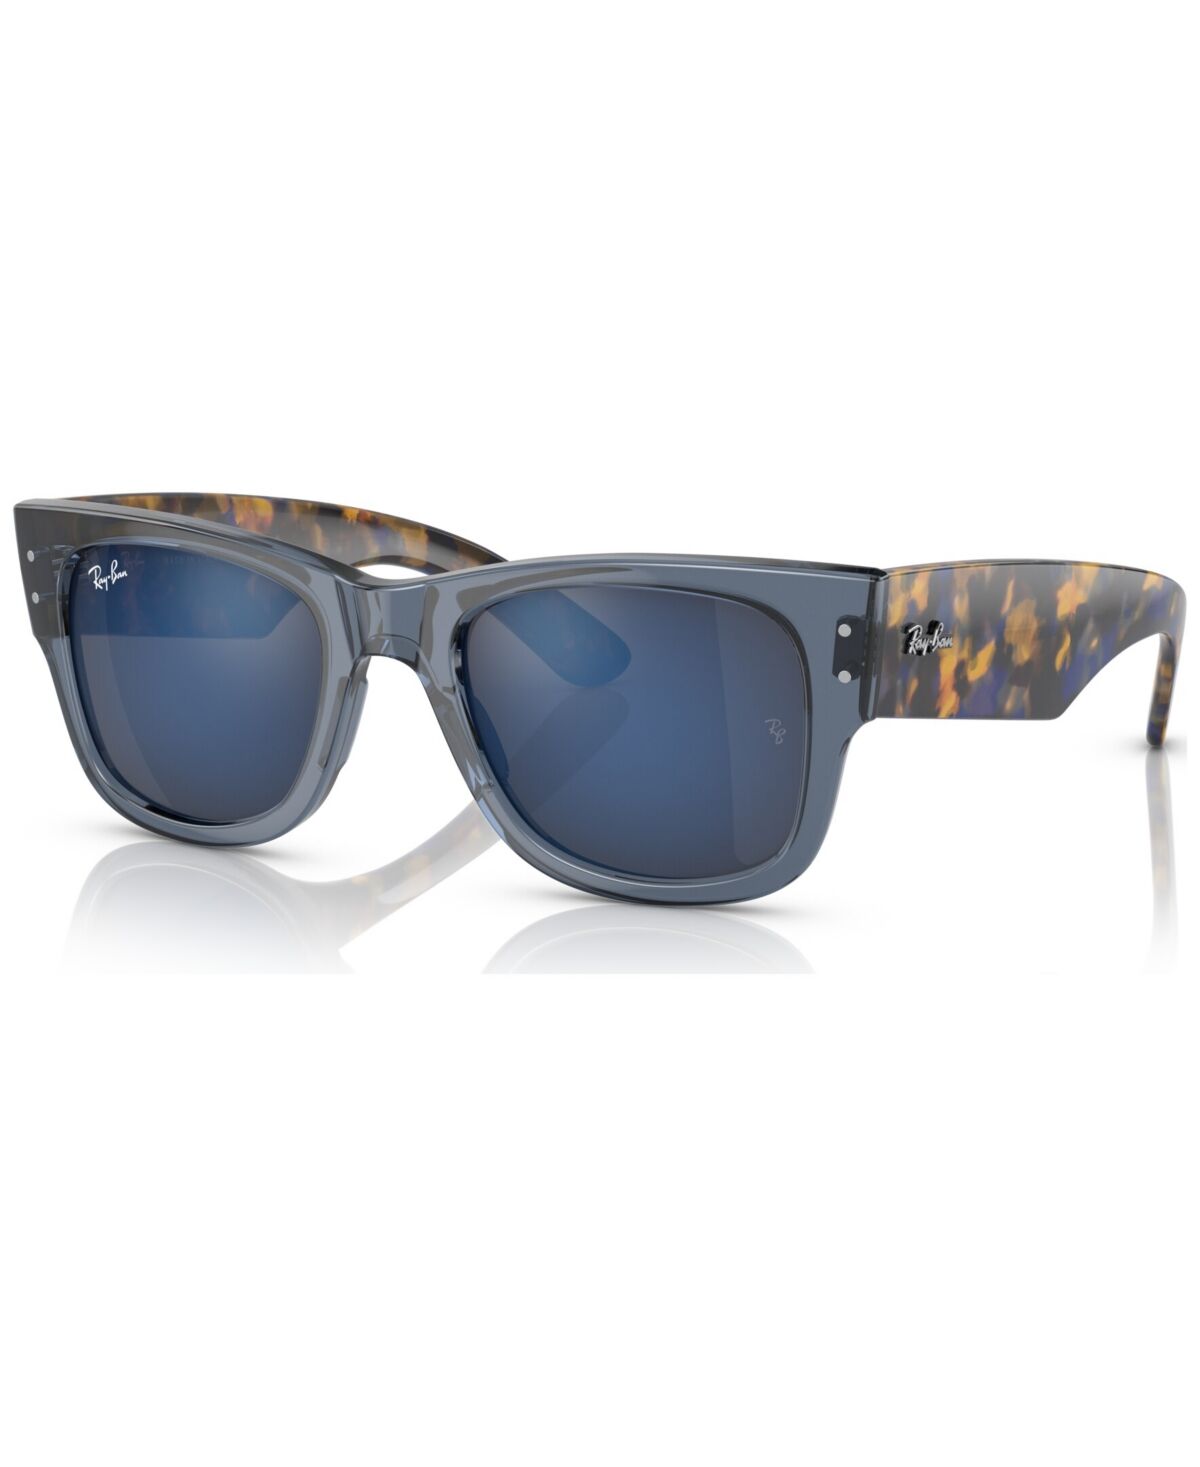 Ray-Ban Mega Wayfarer 51 Unisex Sunglasses - Transparent Dark Blue